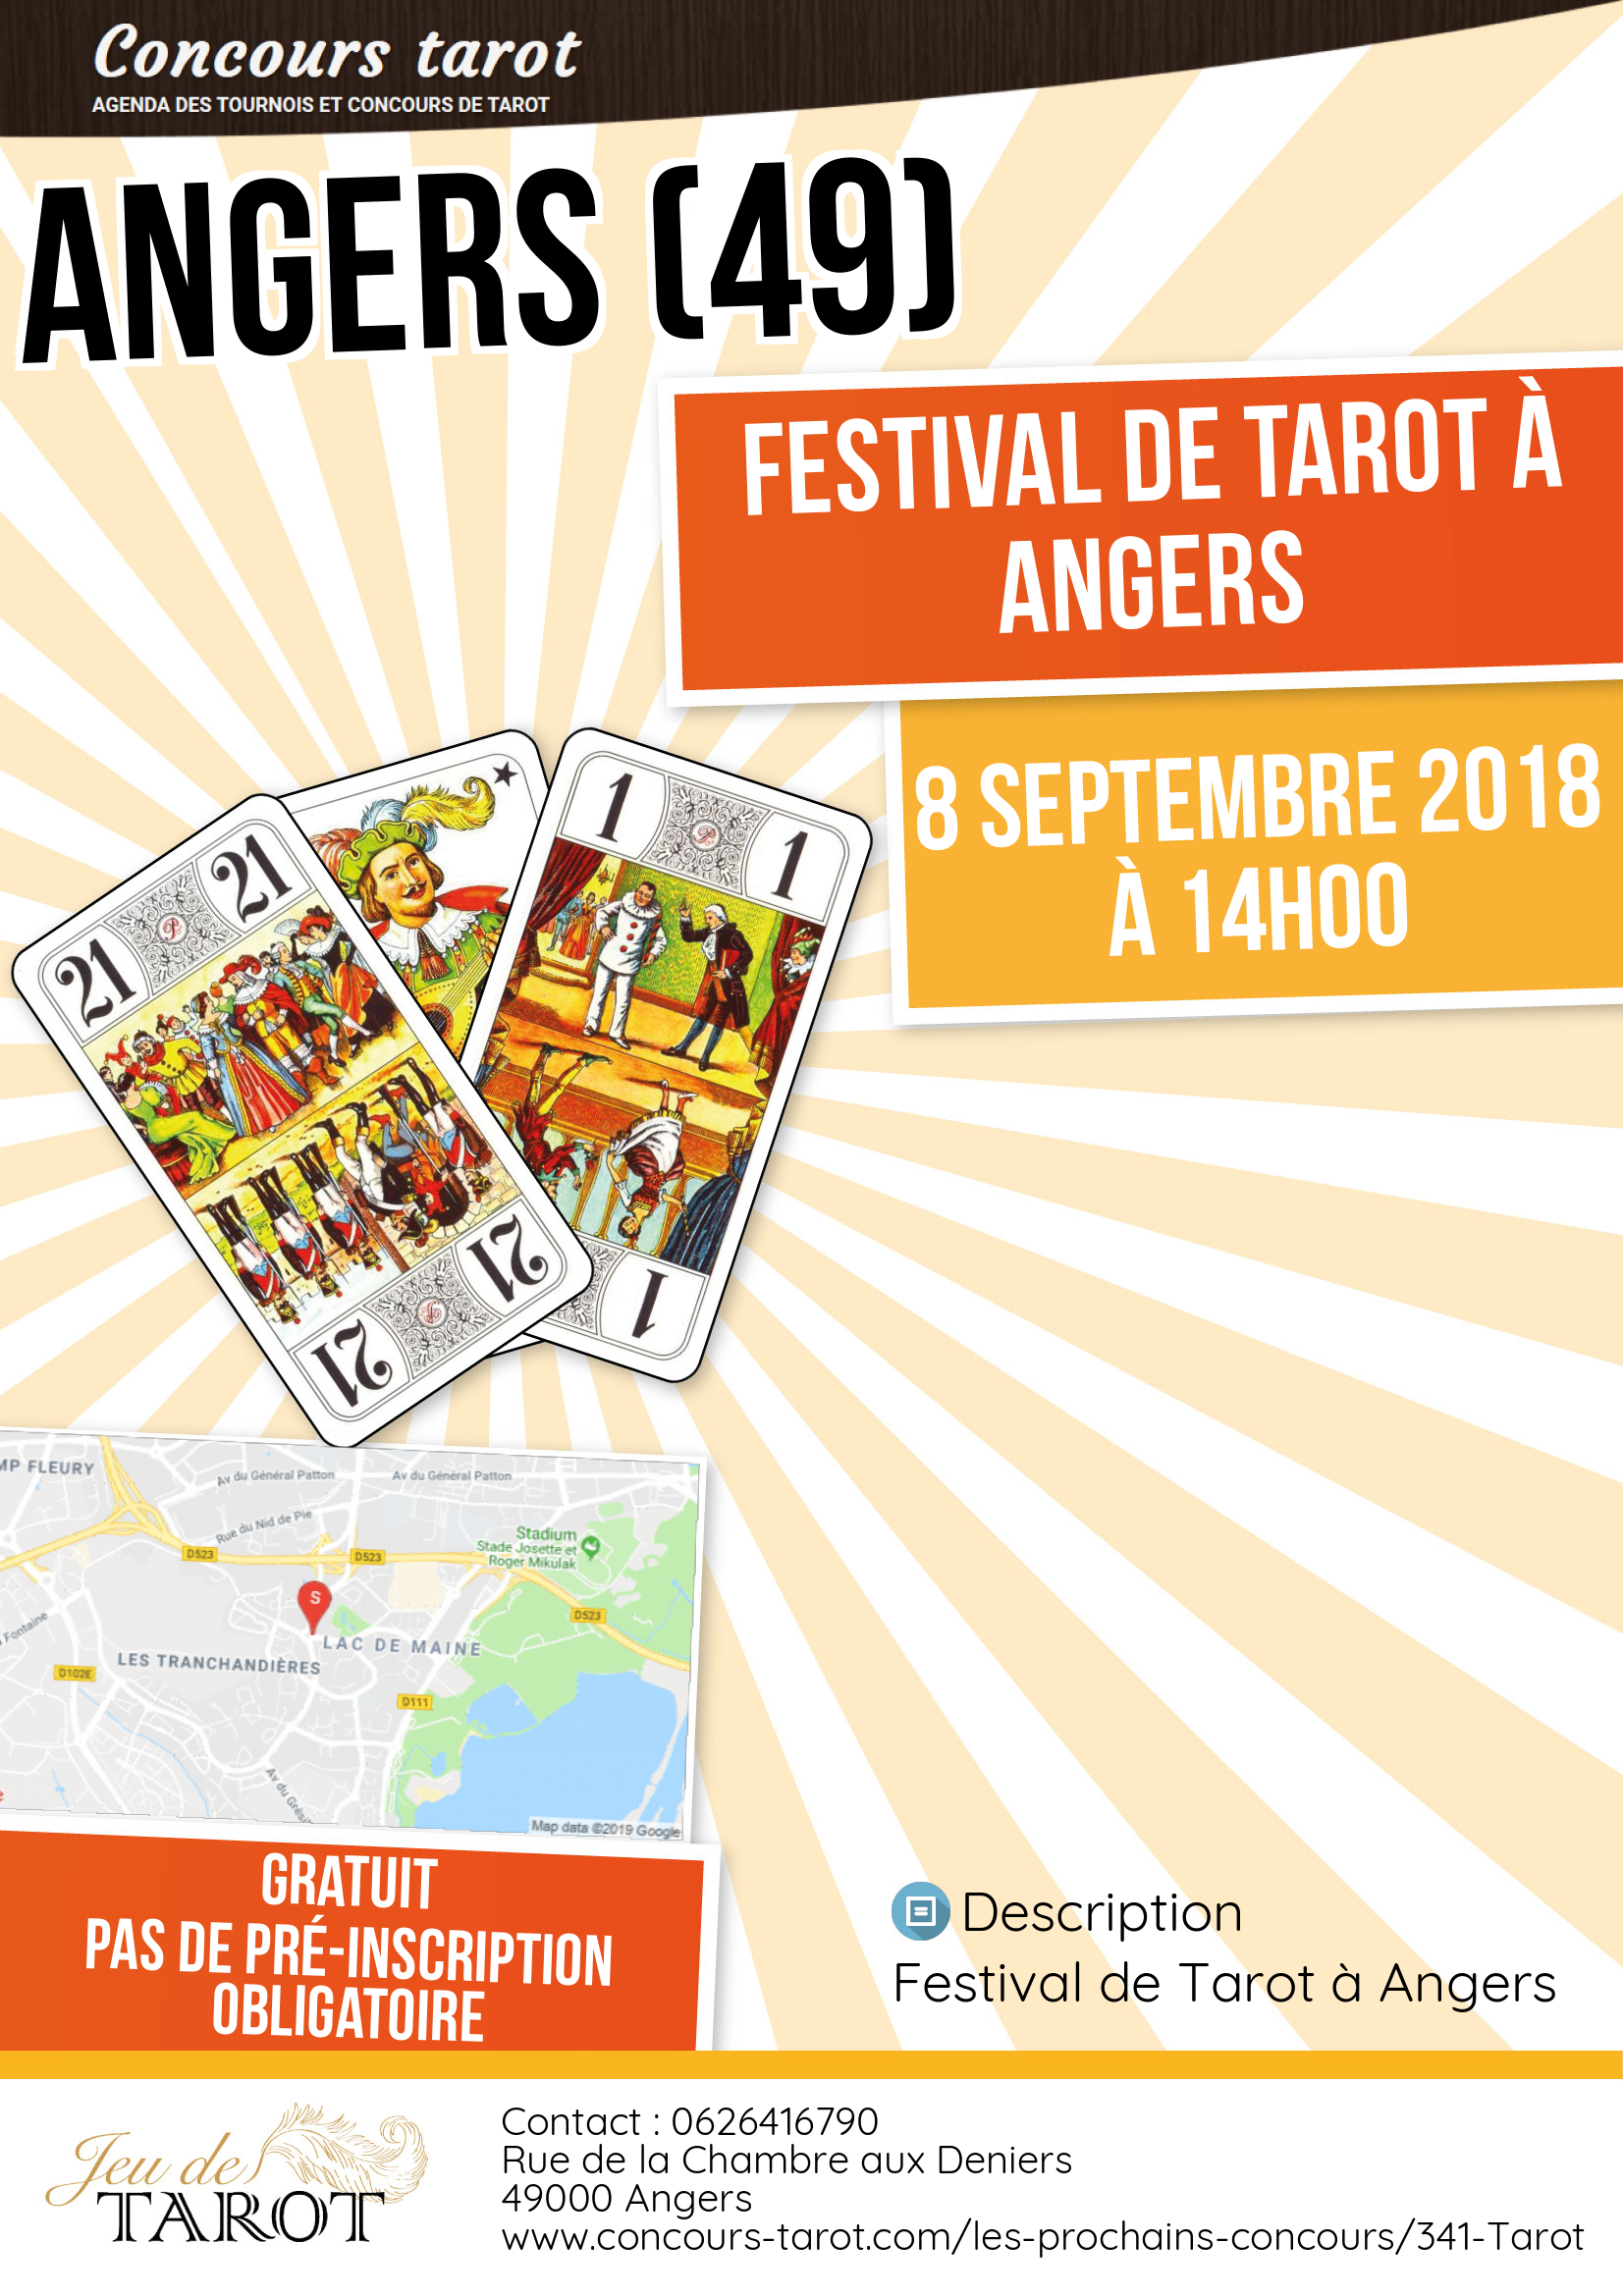 Festival de Tarot a Angers